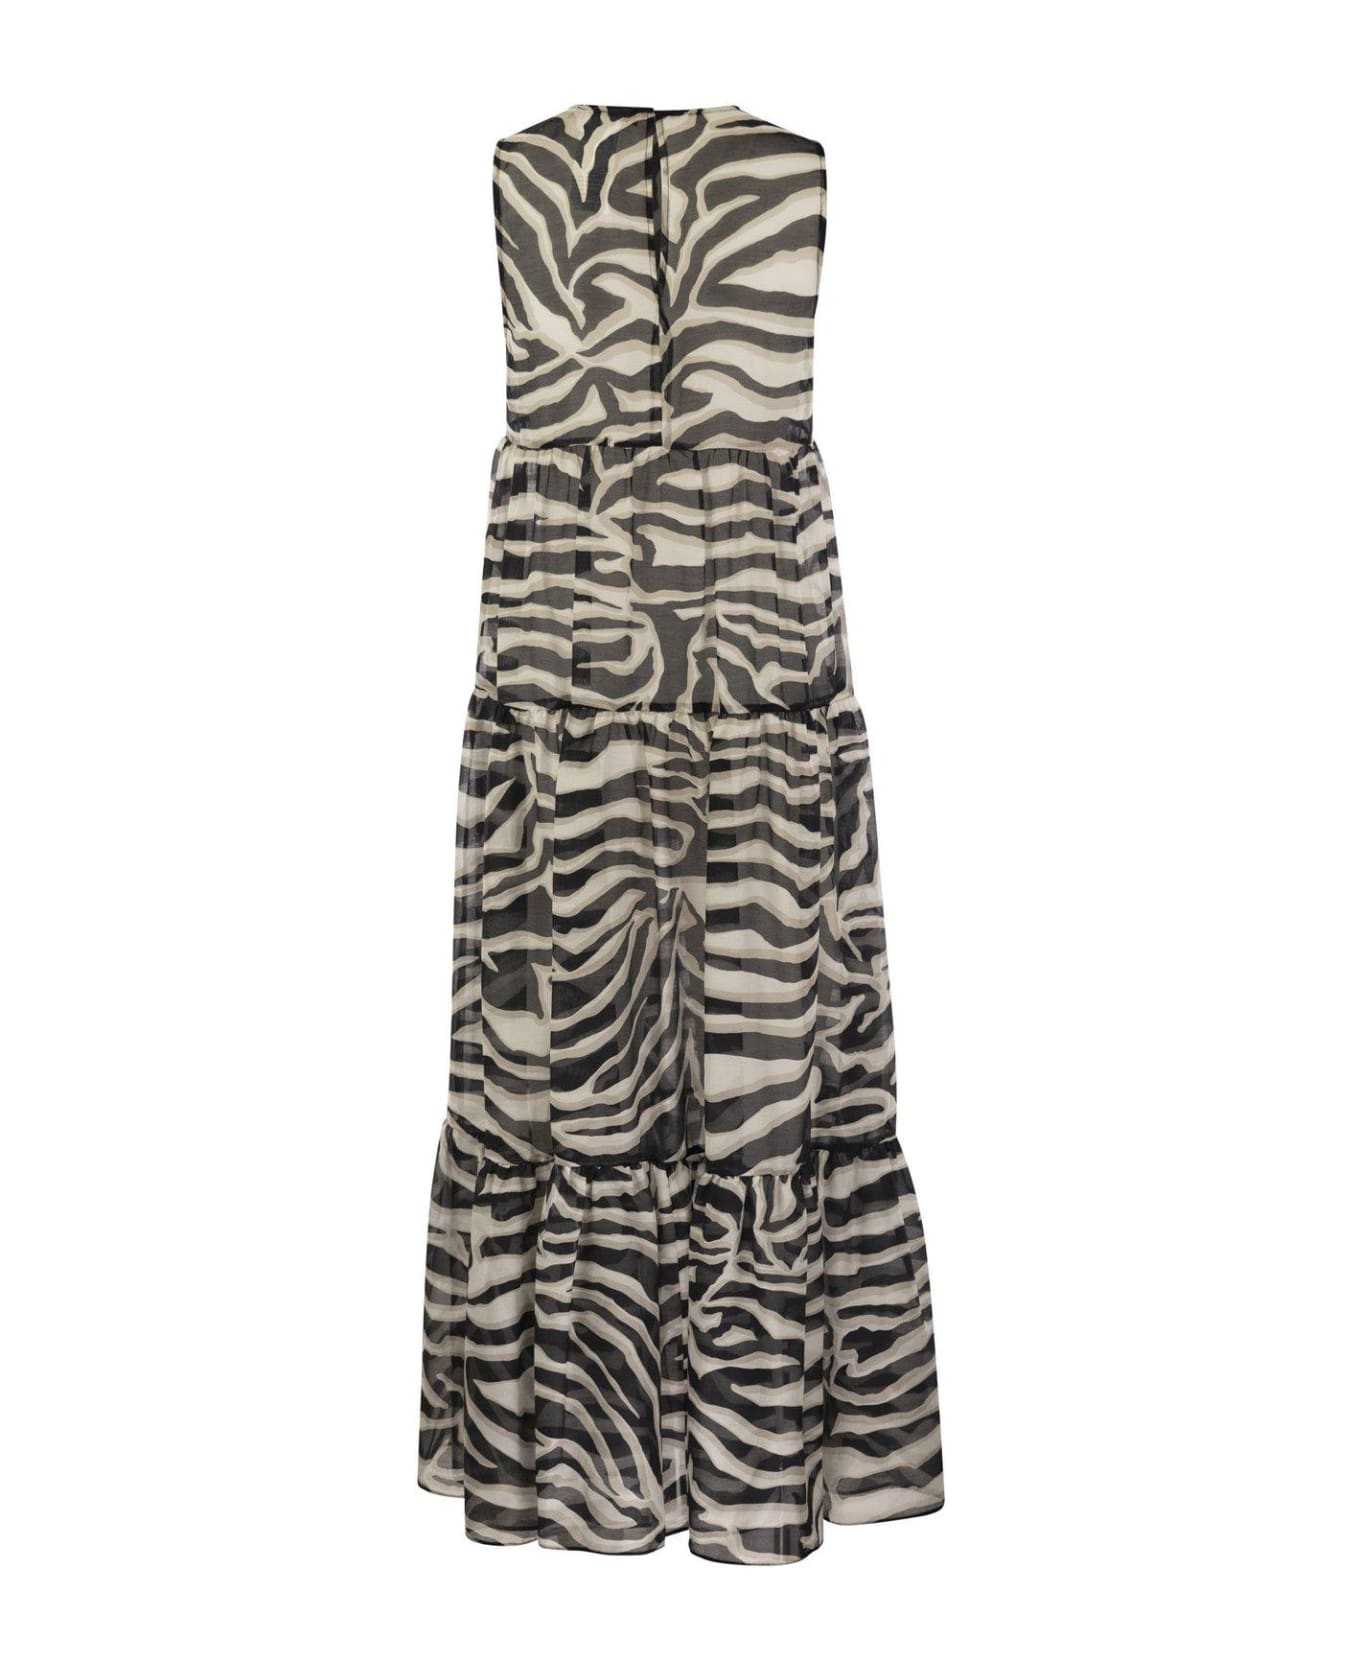 Max Mara Studio Zebra Printed Crewneck Sleeveless Dress - Zebra